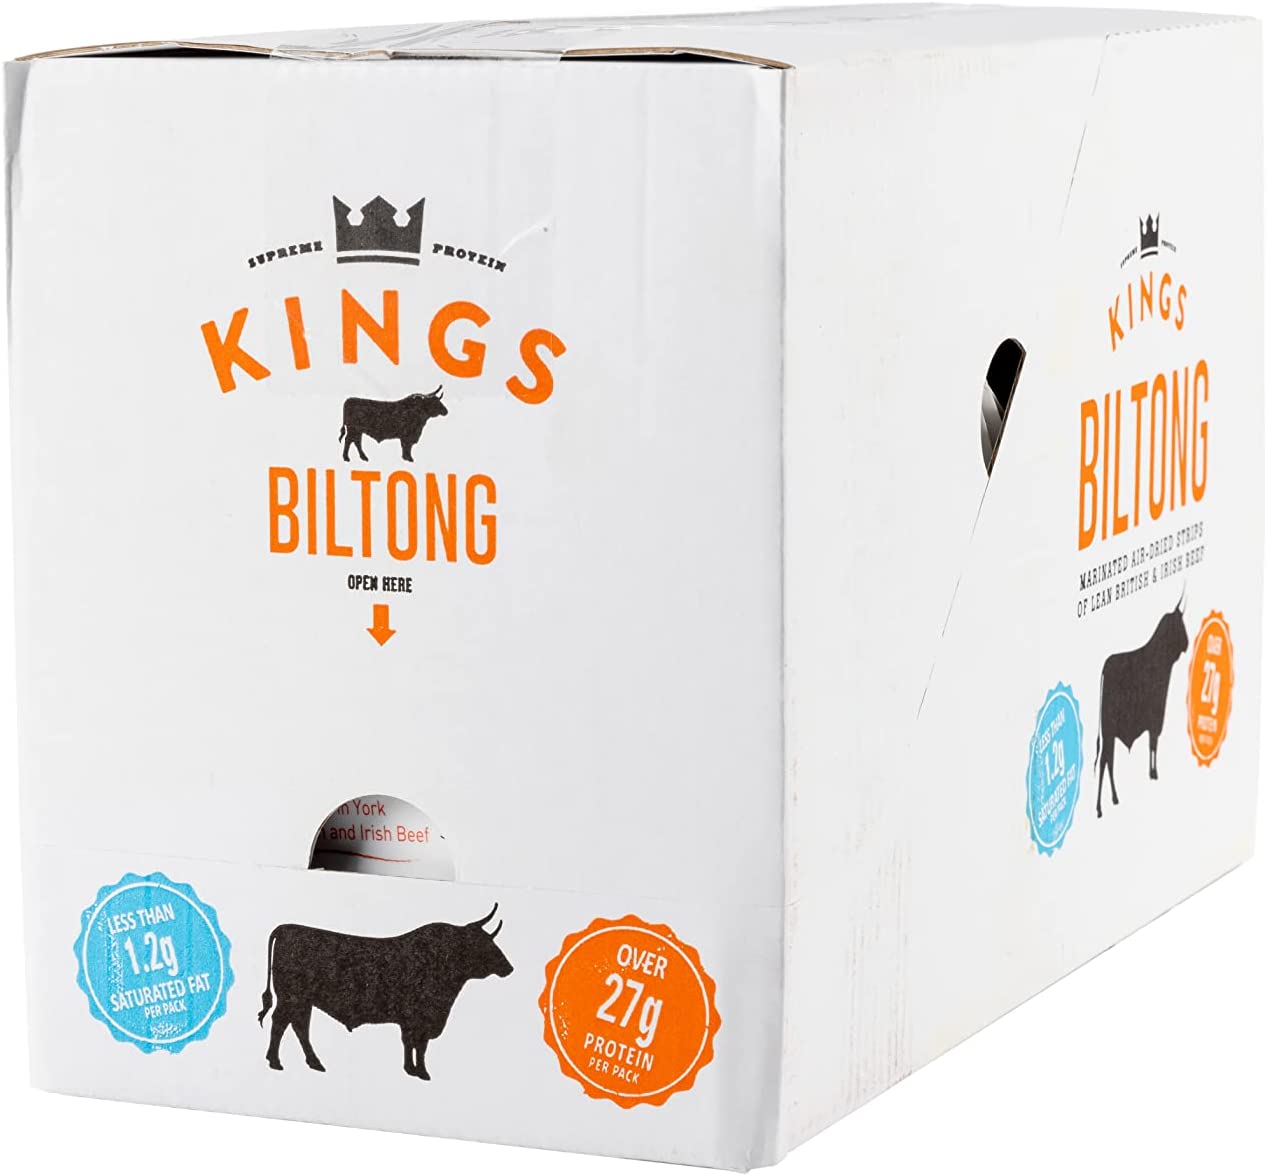 Kings Ribeye Biltong Box 16 x 35g Review - Box